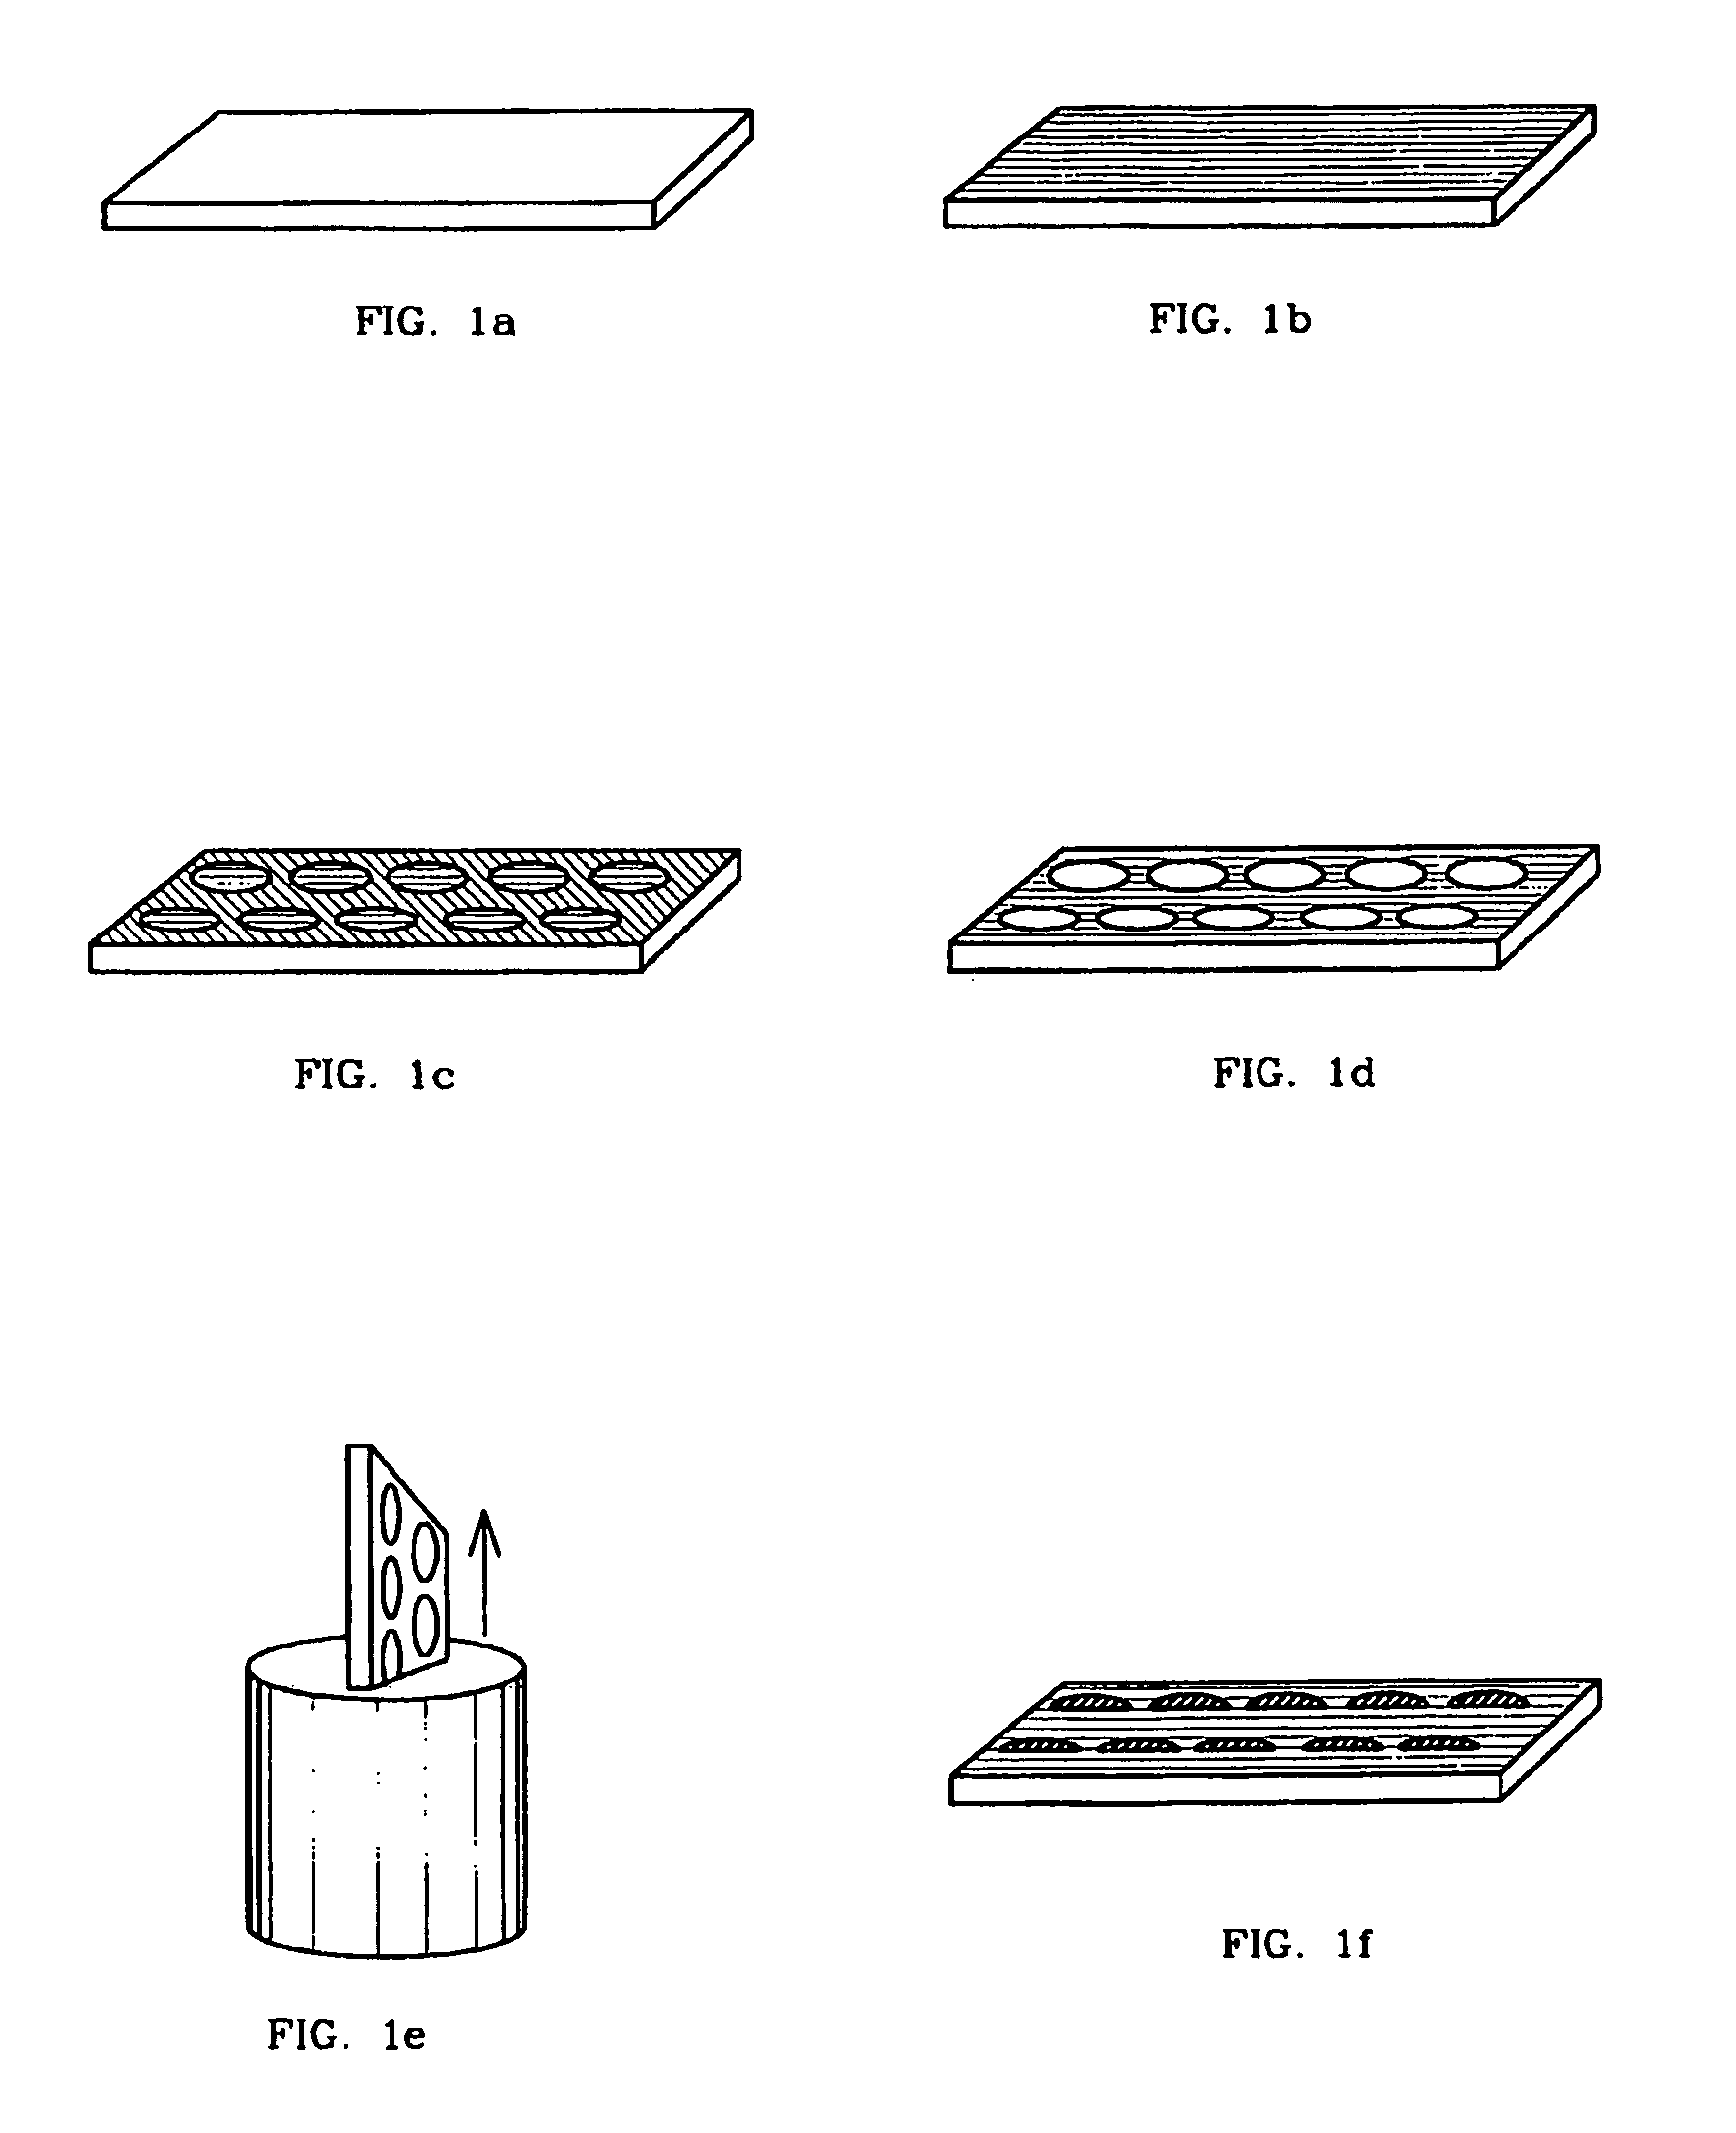 Precise fabrication of polymer microlens arrays